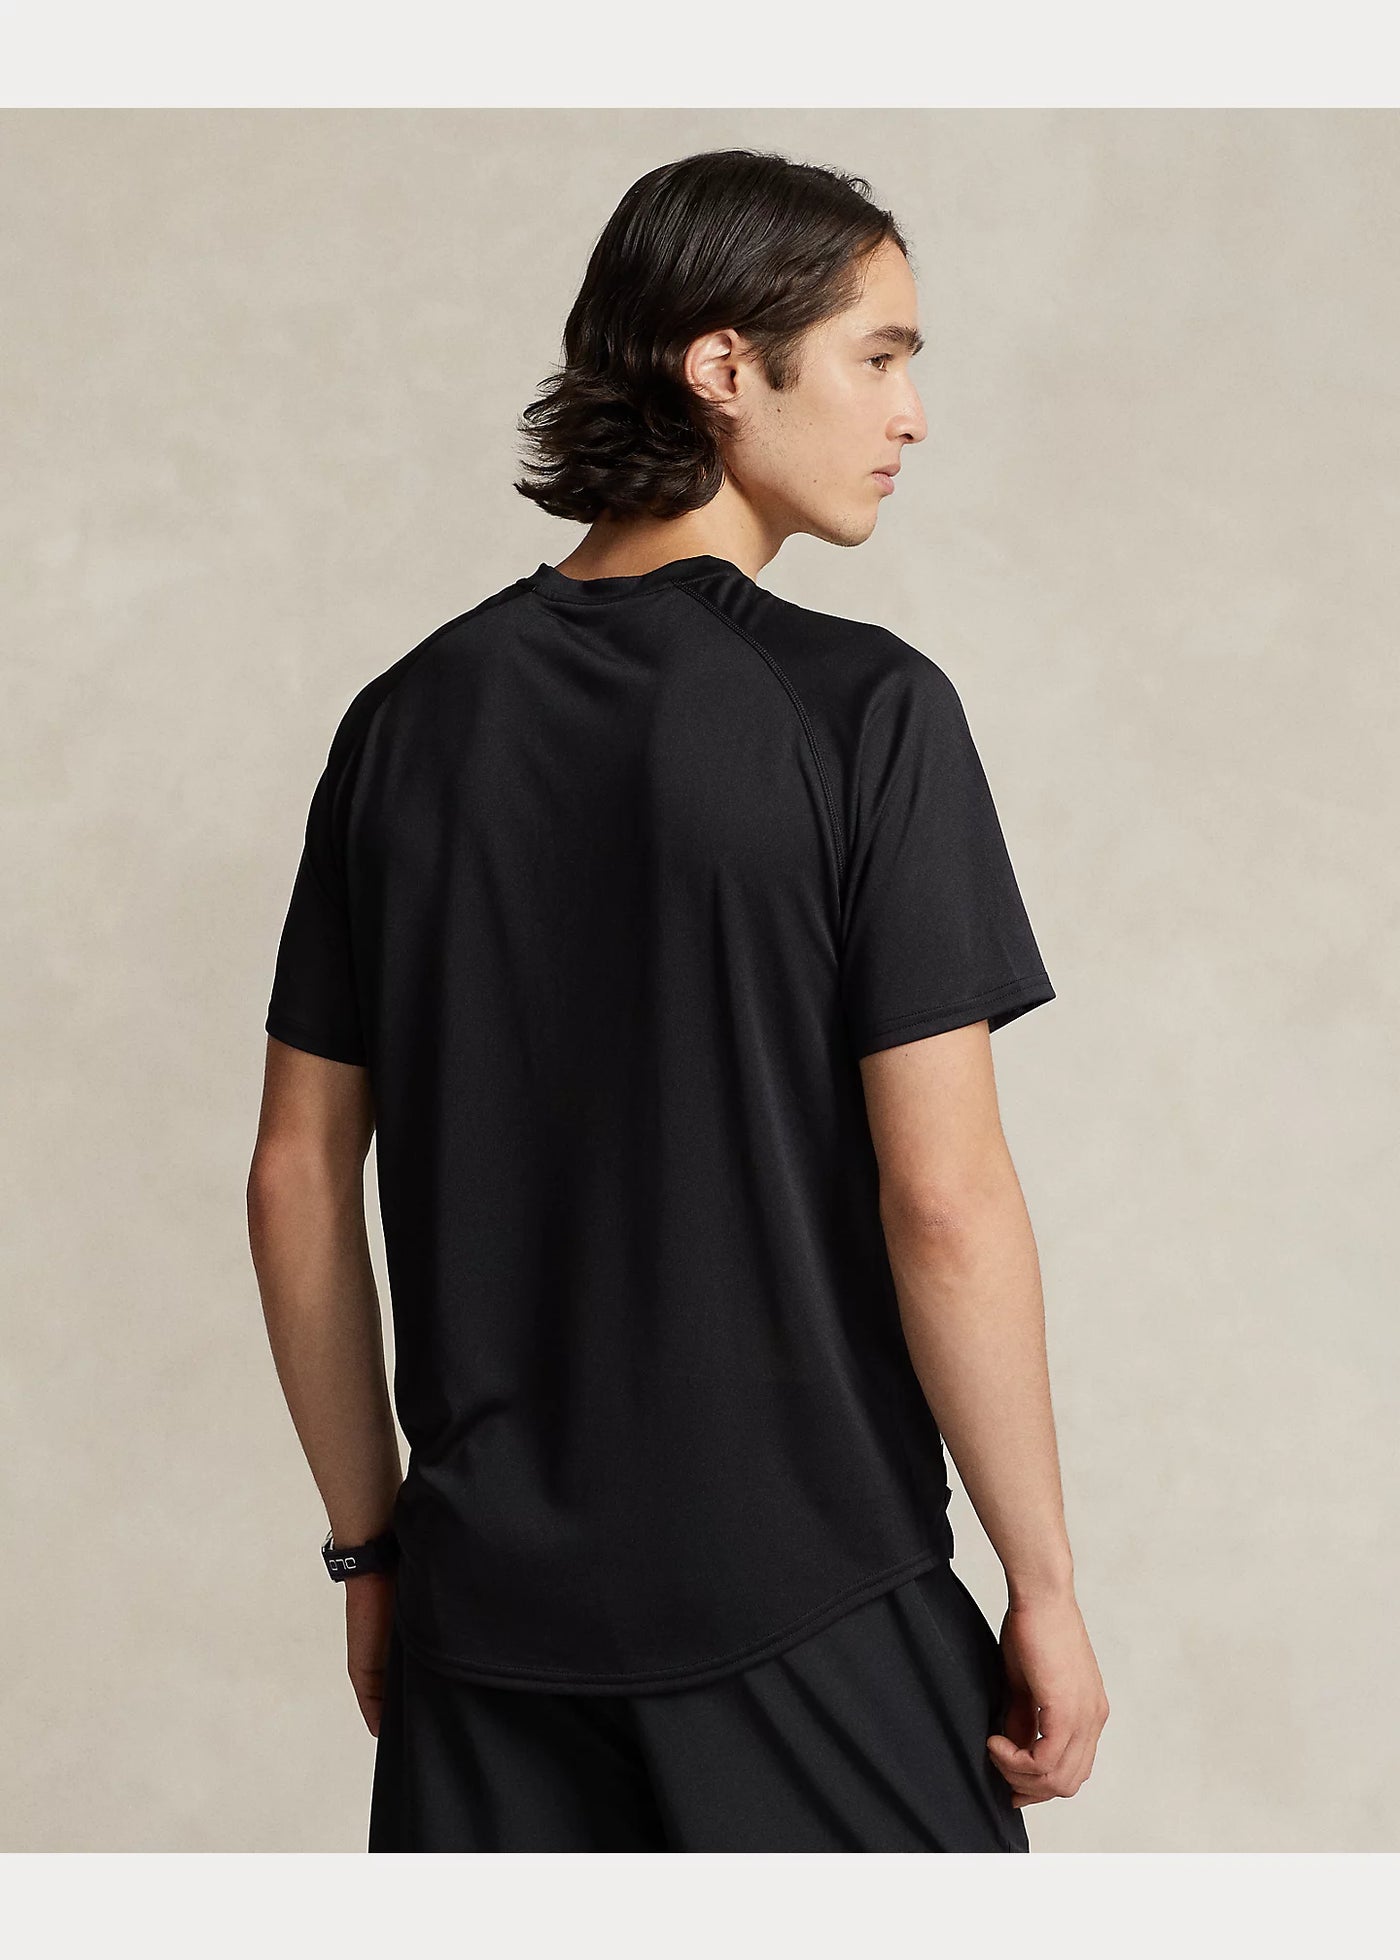 Ralph Lauren Performance Jersey Crew Neck T-Shirt | Black